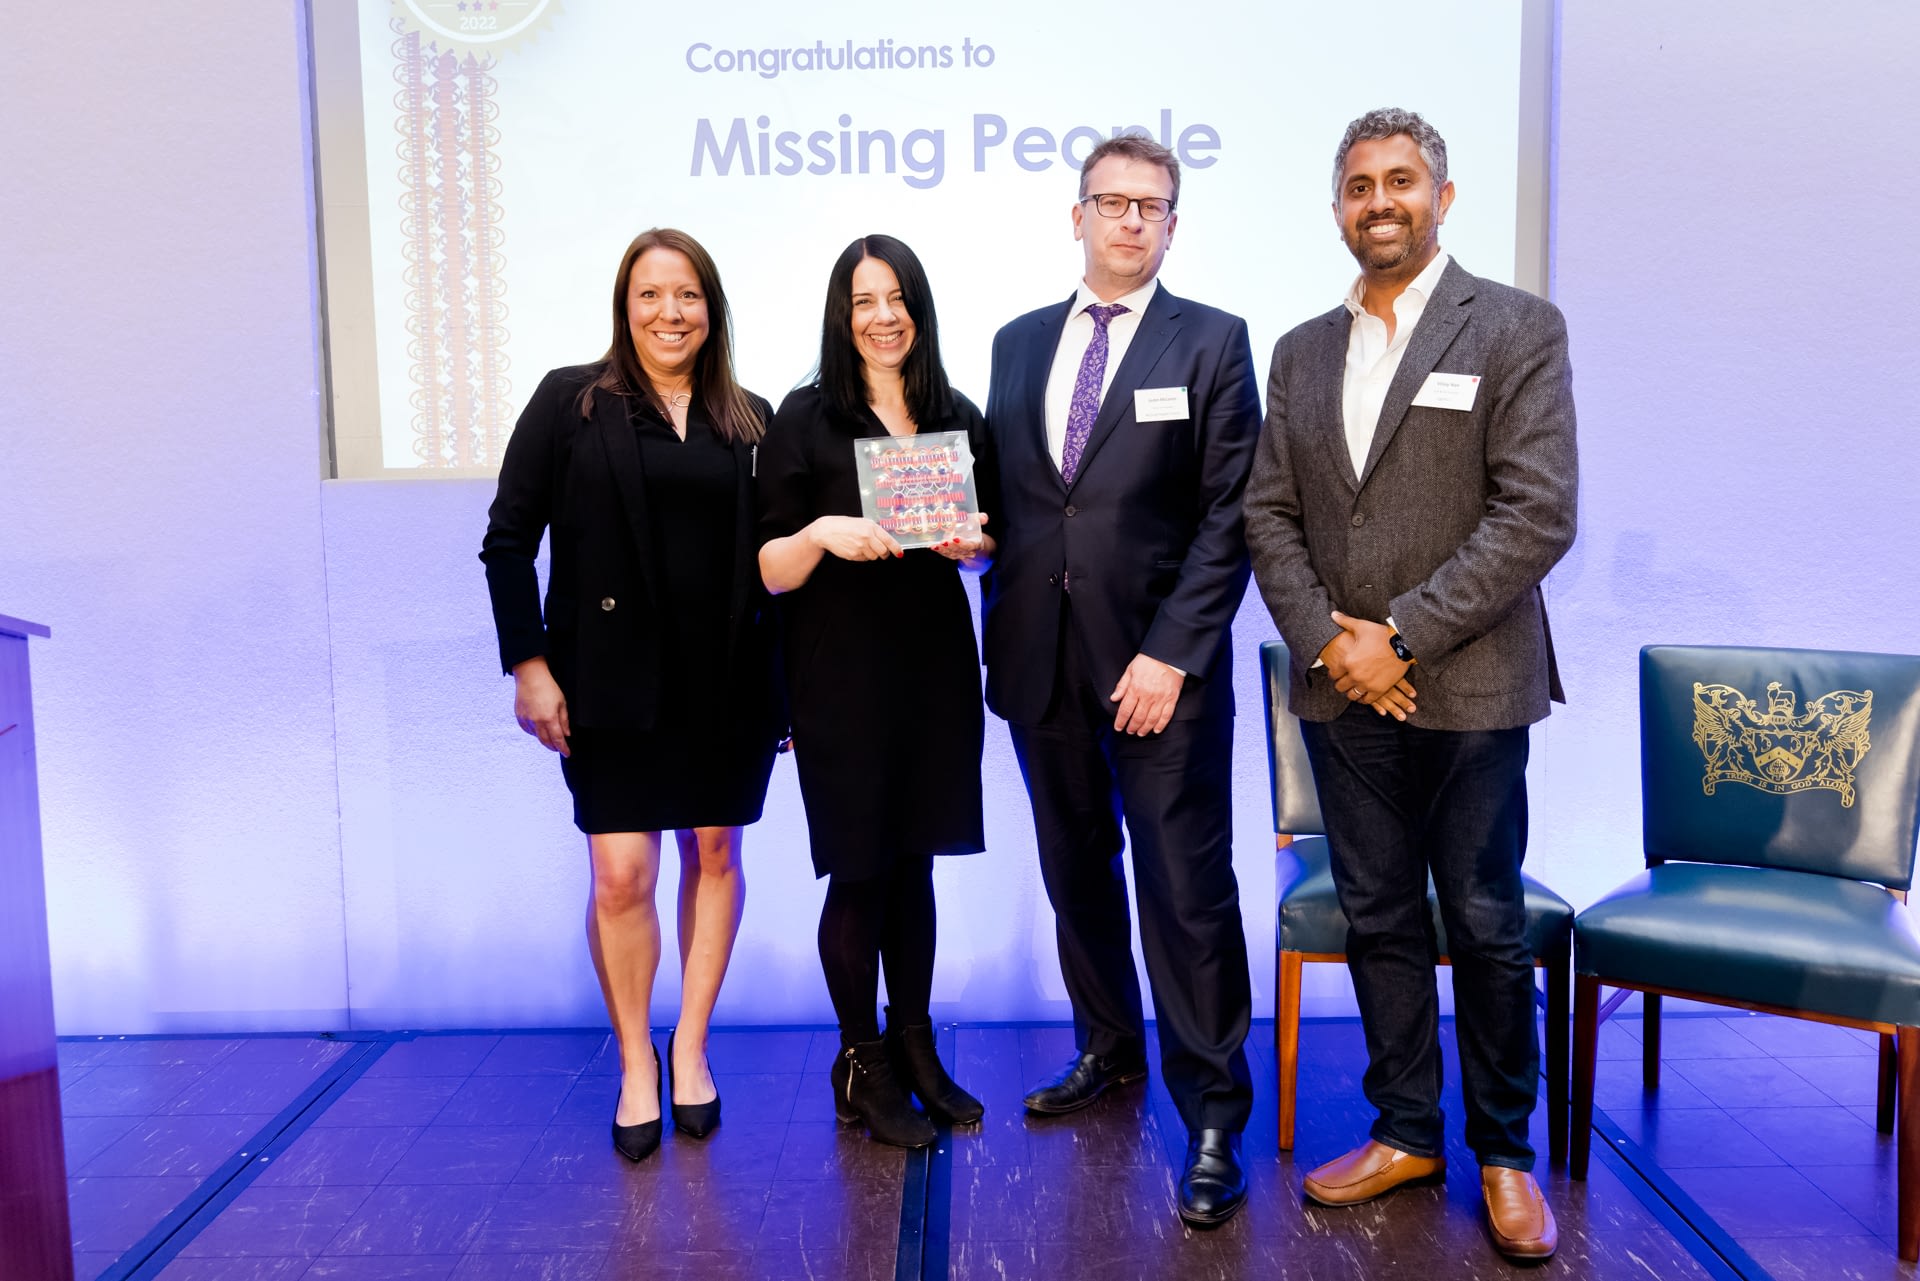 Missing People staff receiving their award